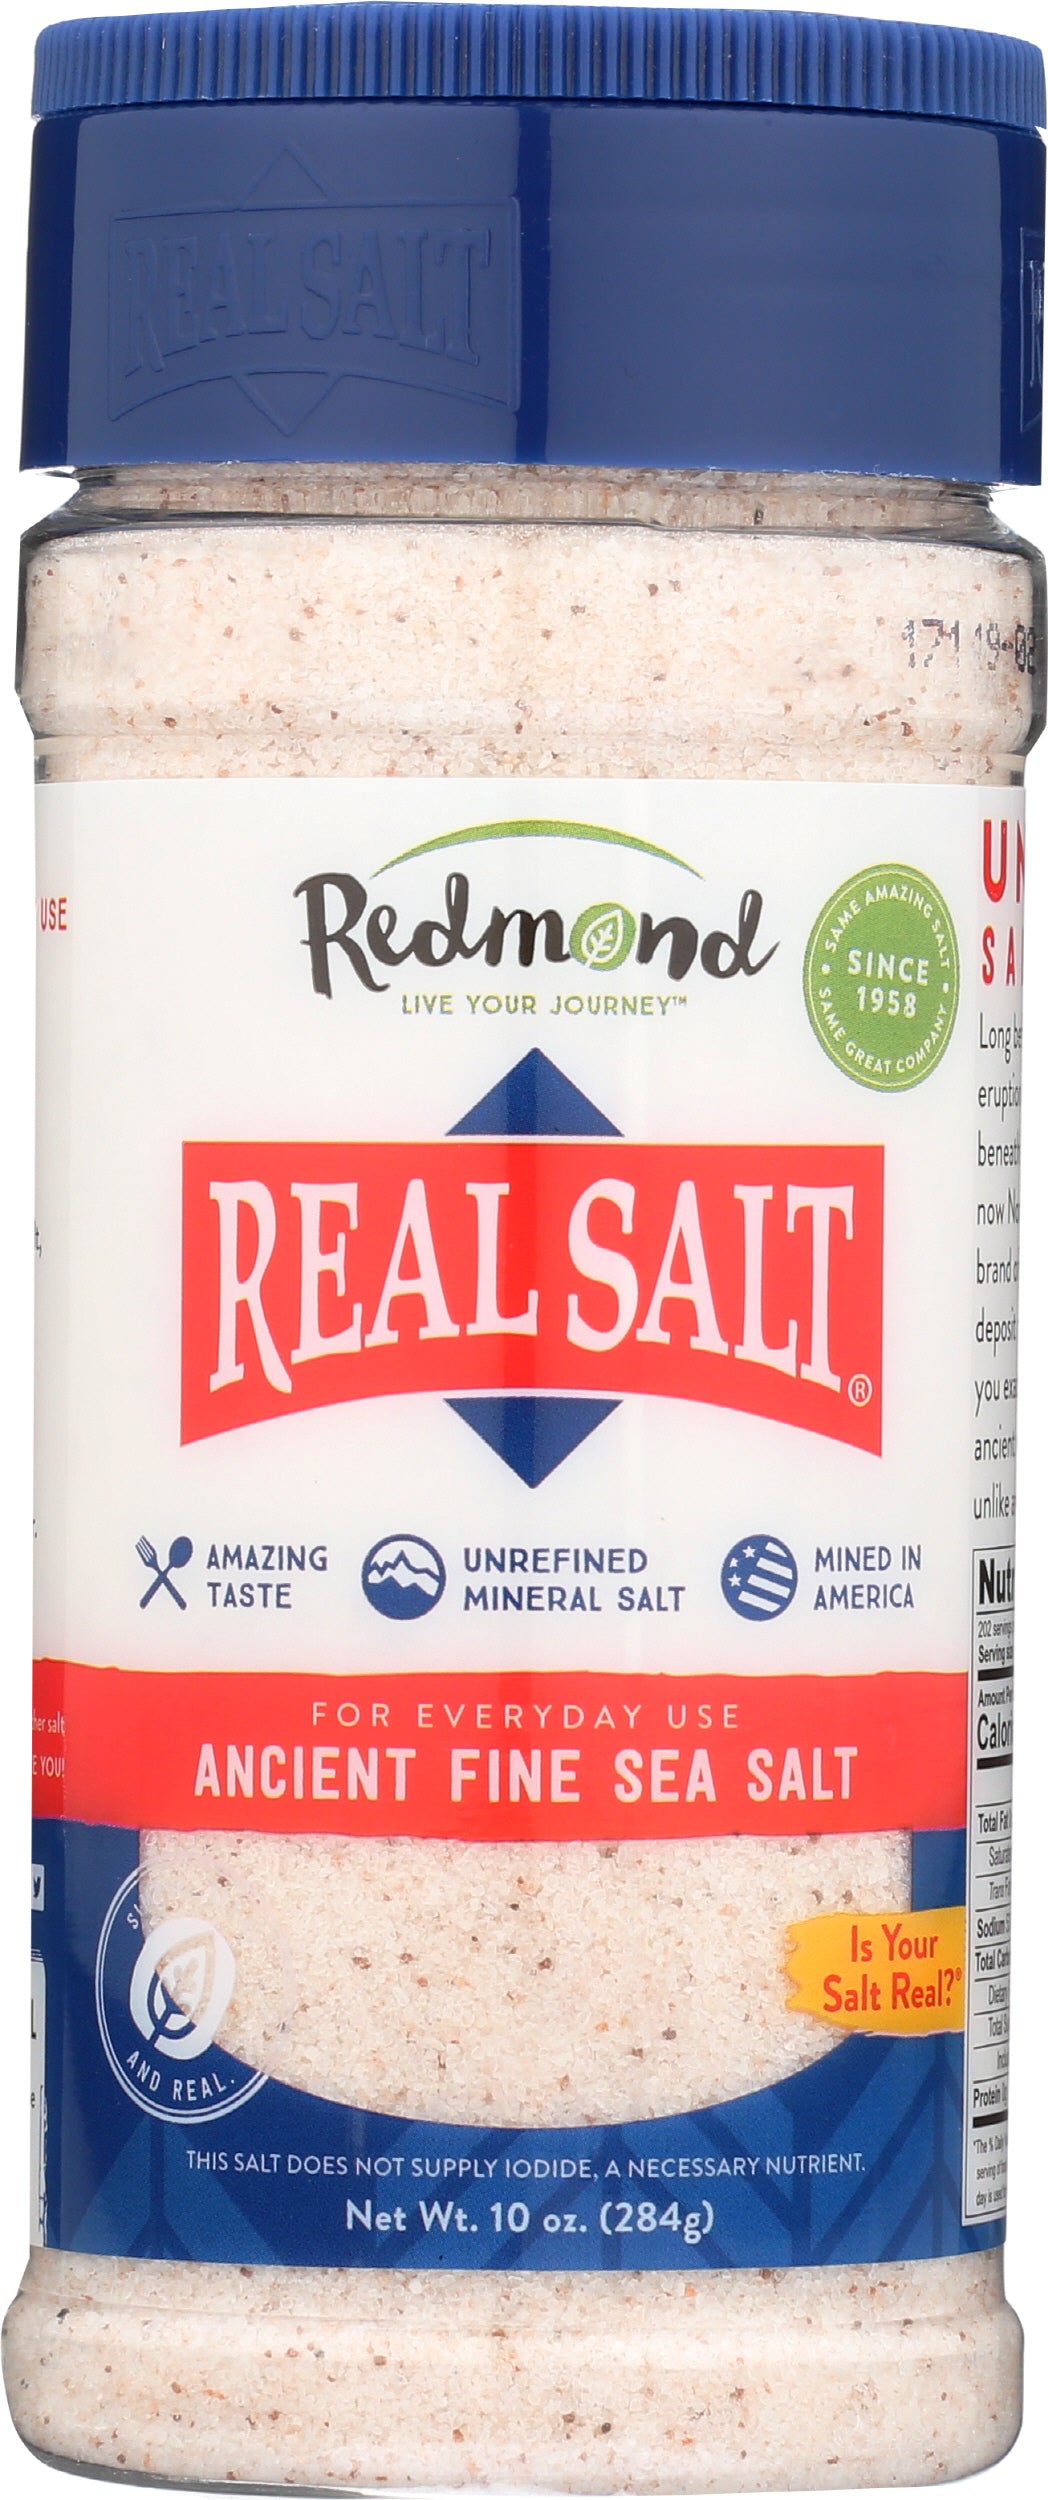 Redmond Real Salt Ancient Fine Sea Salt 10 oz